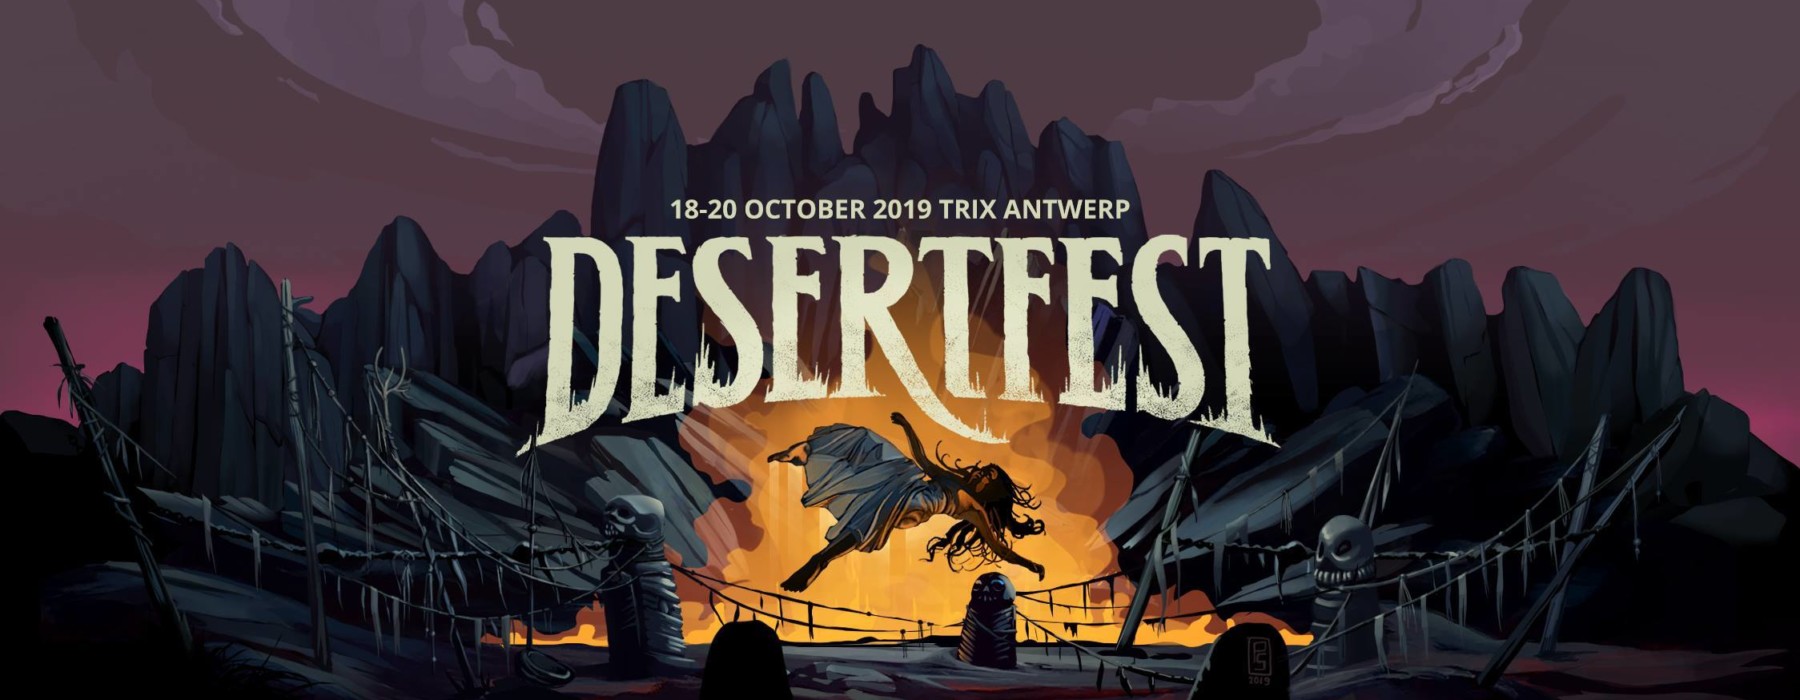 DesertFest Belgium 2019 Playlist